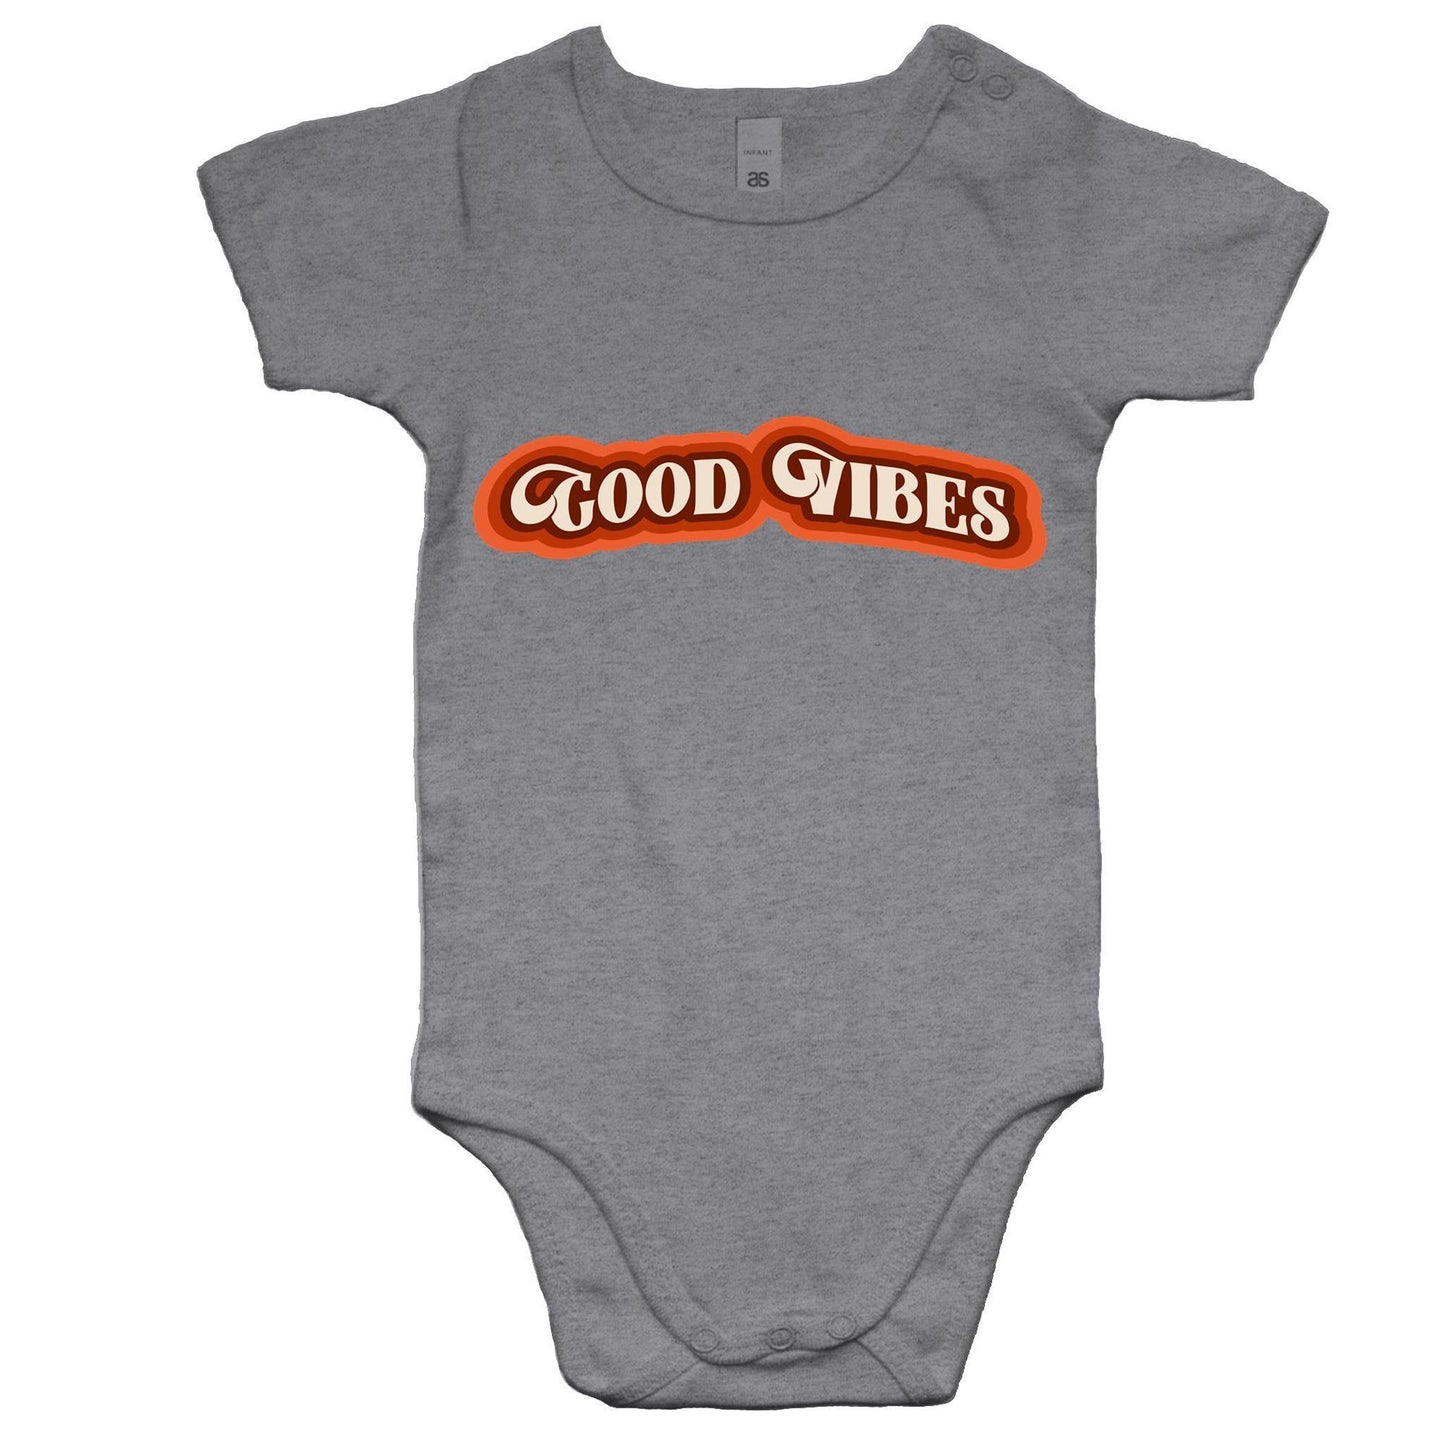 Good Vibes - Baby Bodysuit Grey Marle Baby Bodysuit kids Retro